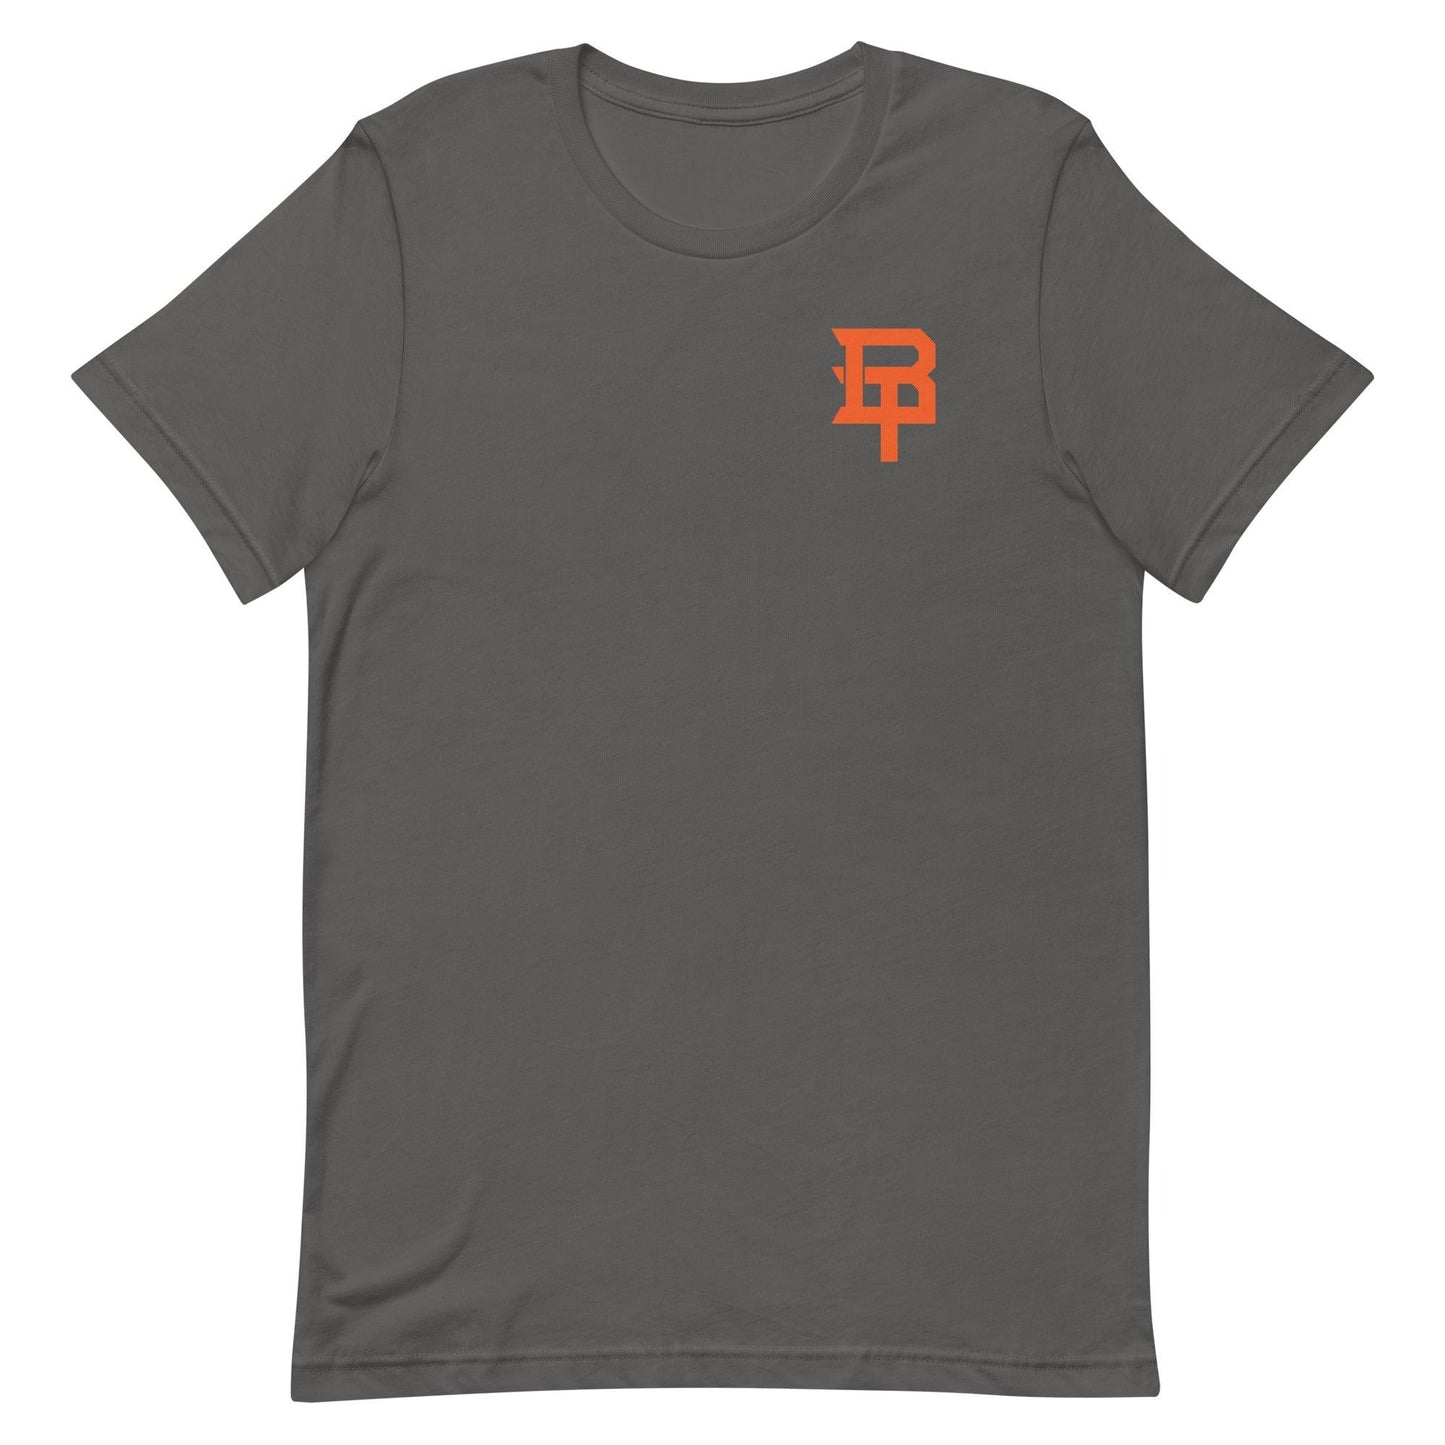 Brandon Turnage "BT" t-shirt - Fan Arch